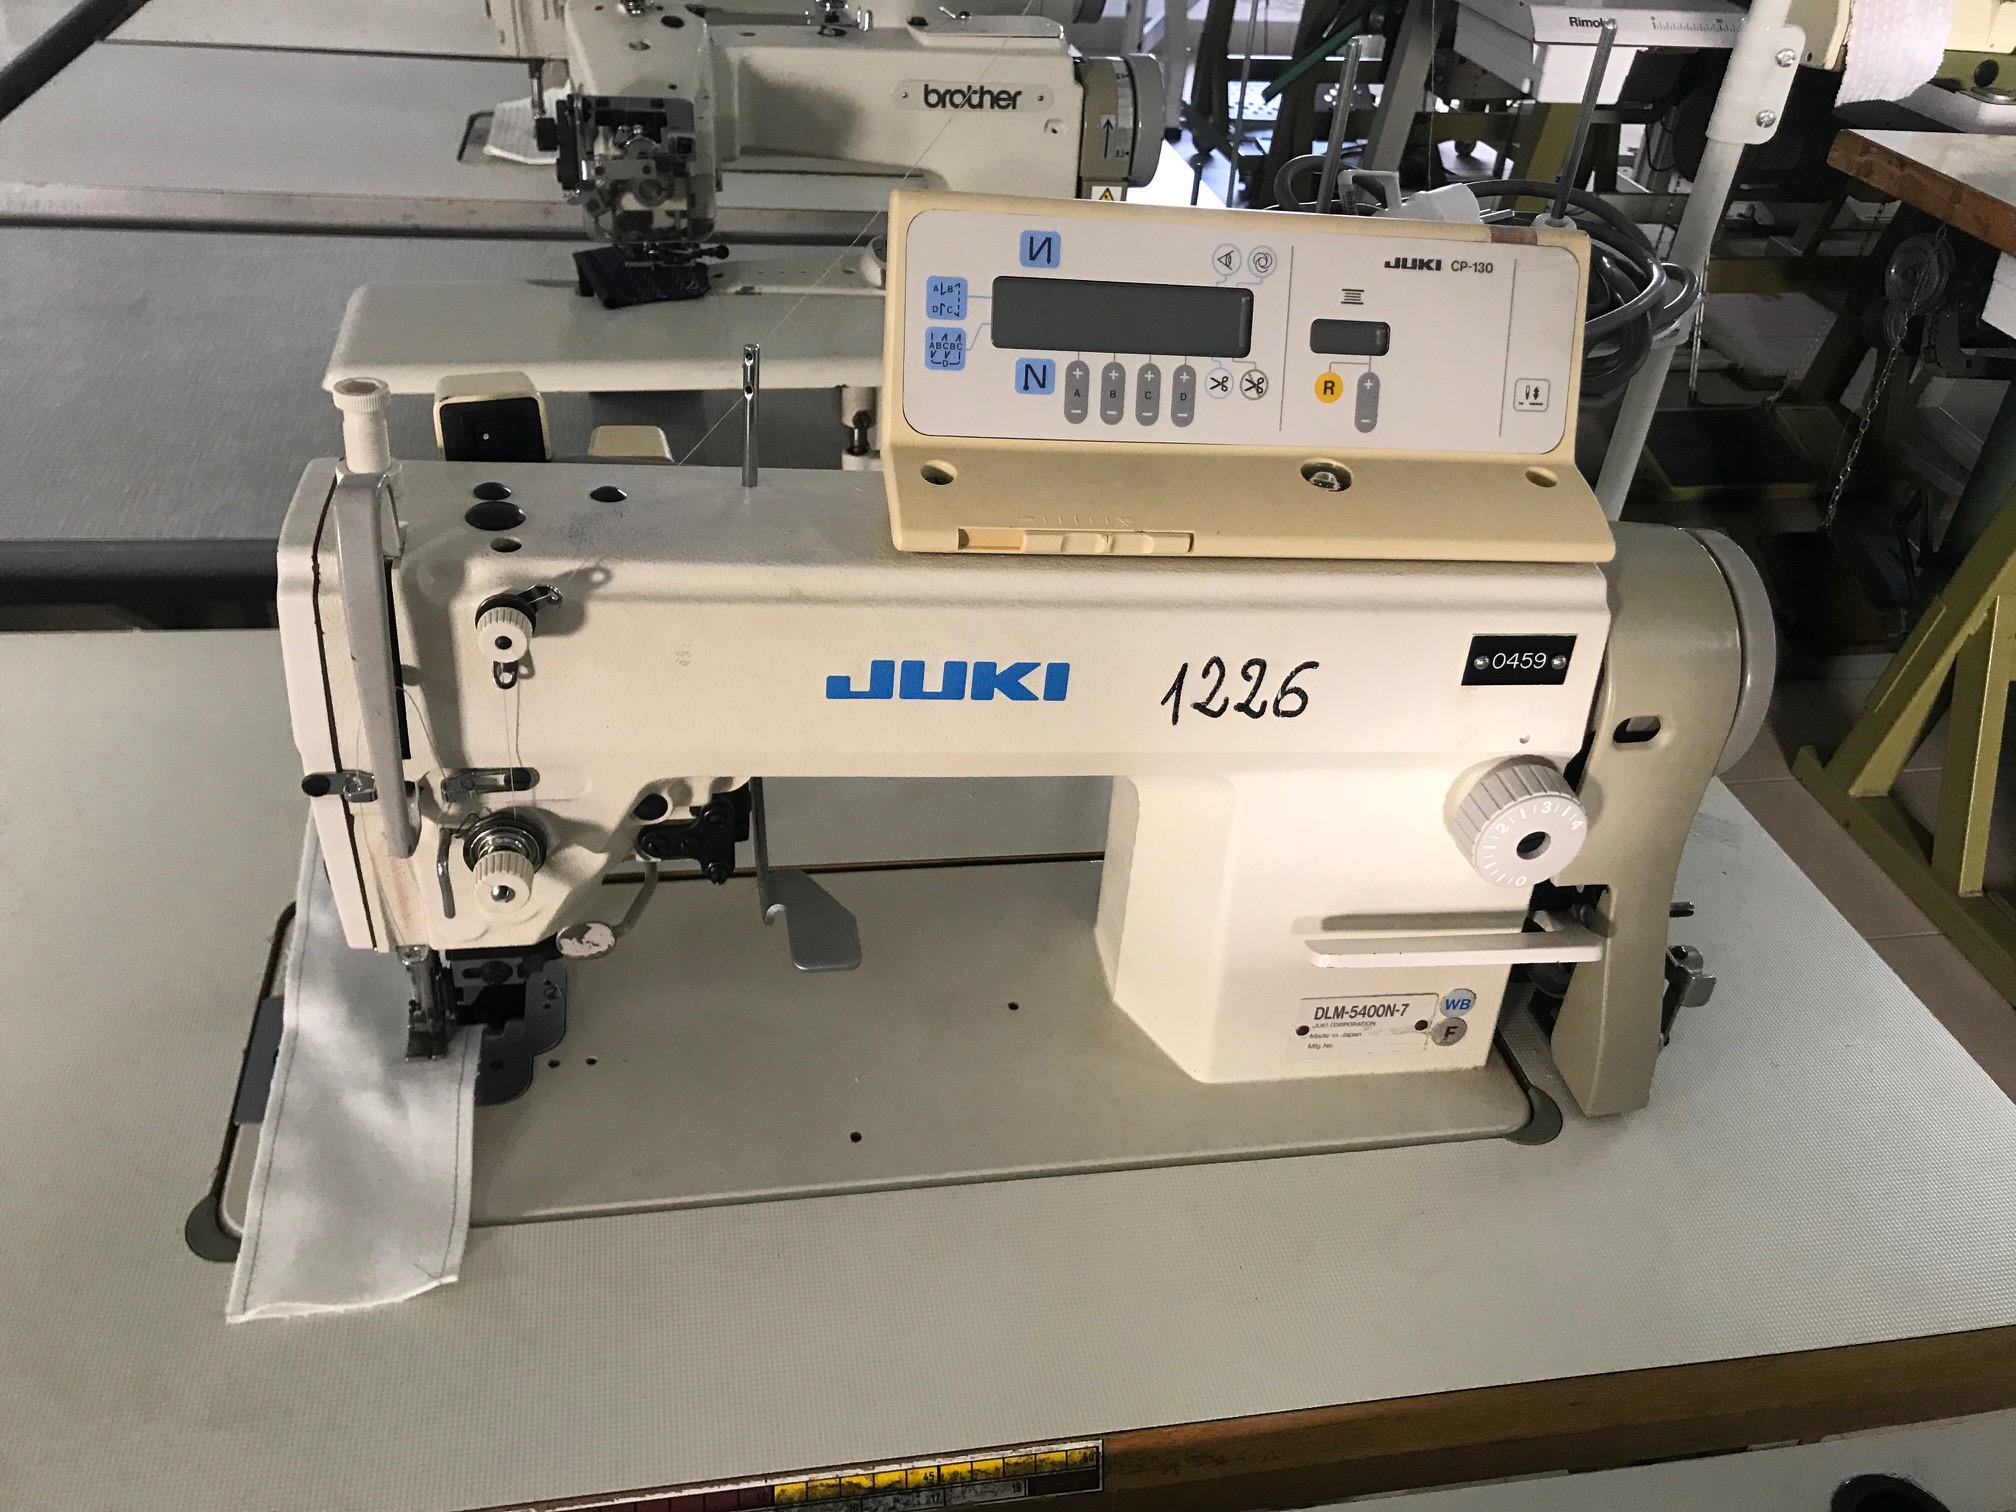 JUKI DLM-5400N-7 Lockstitch Sewing Machine With Edge Cutter